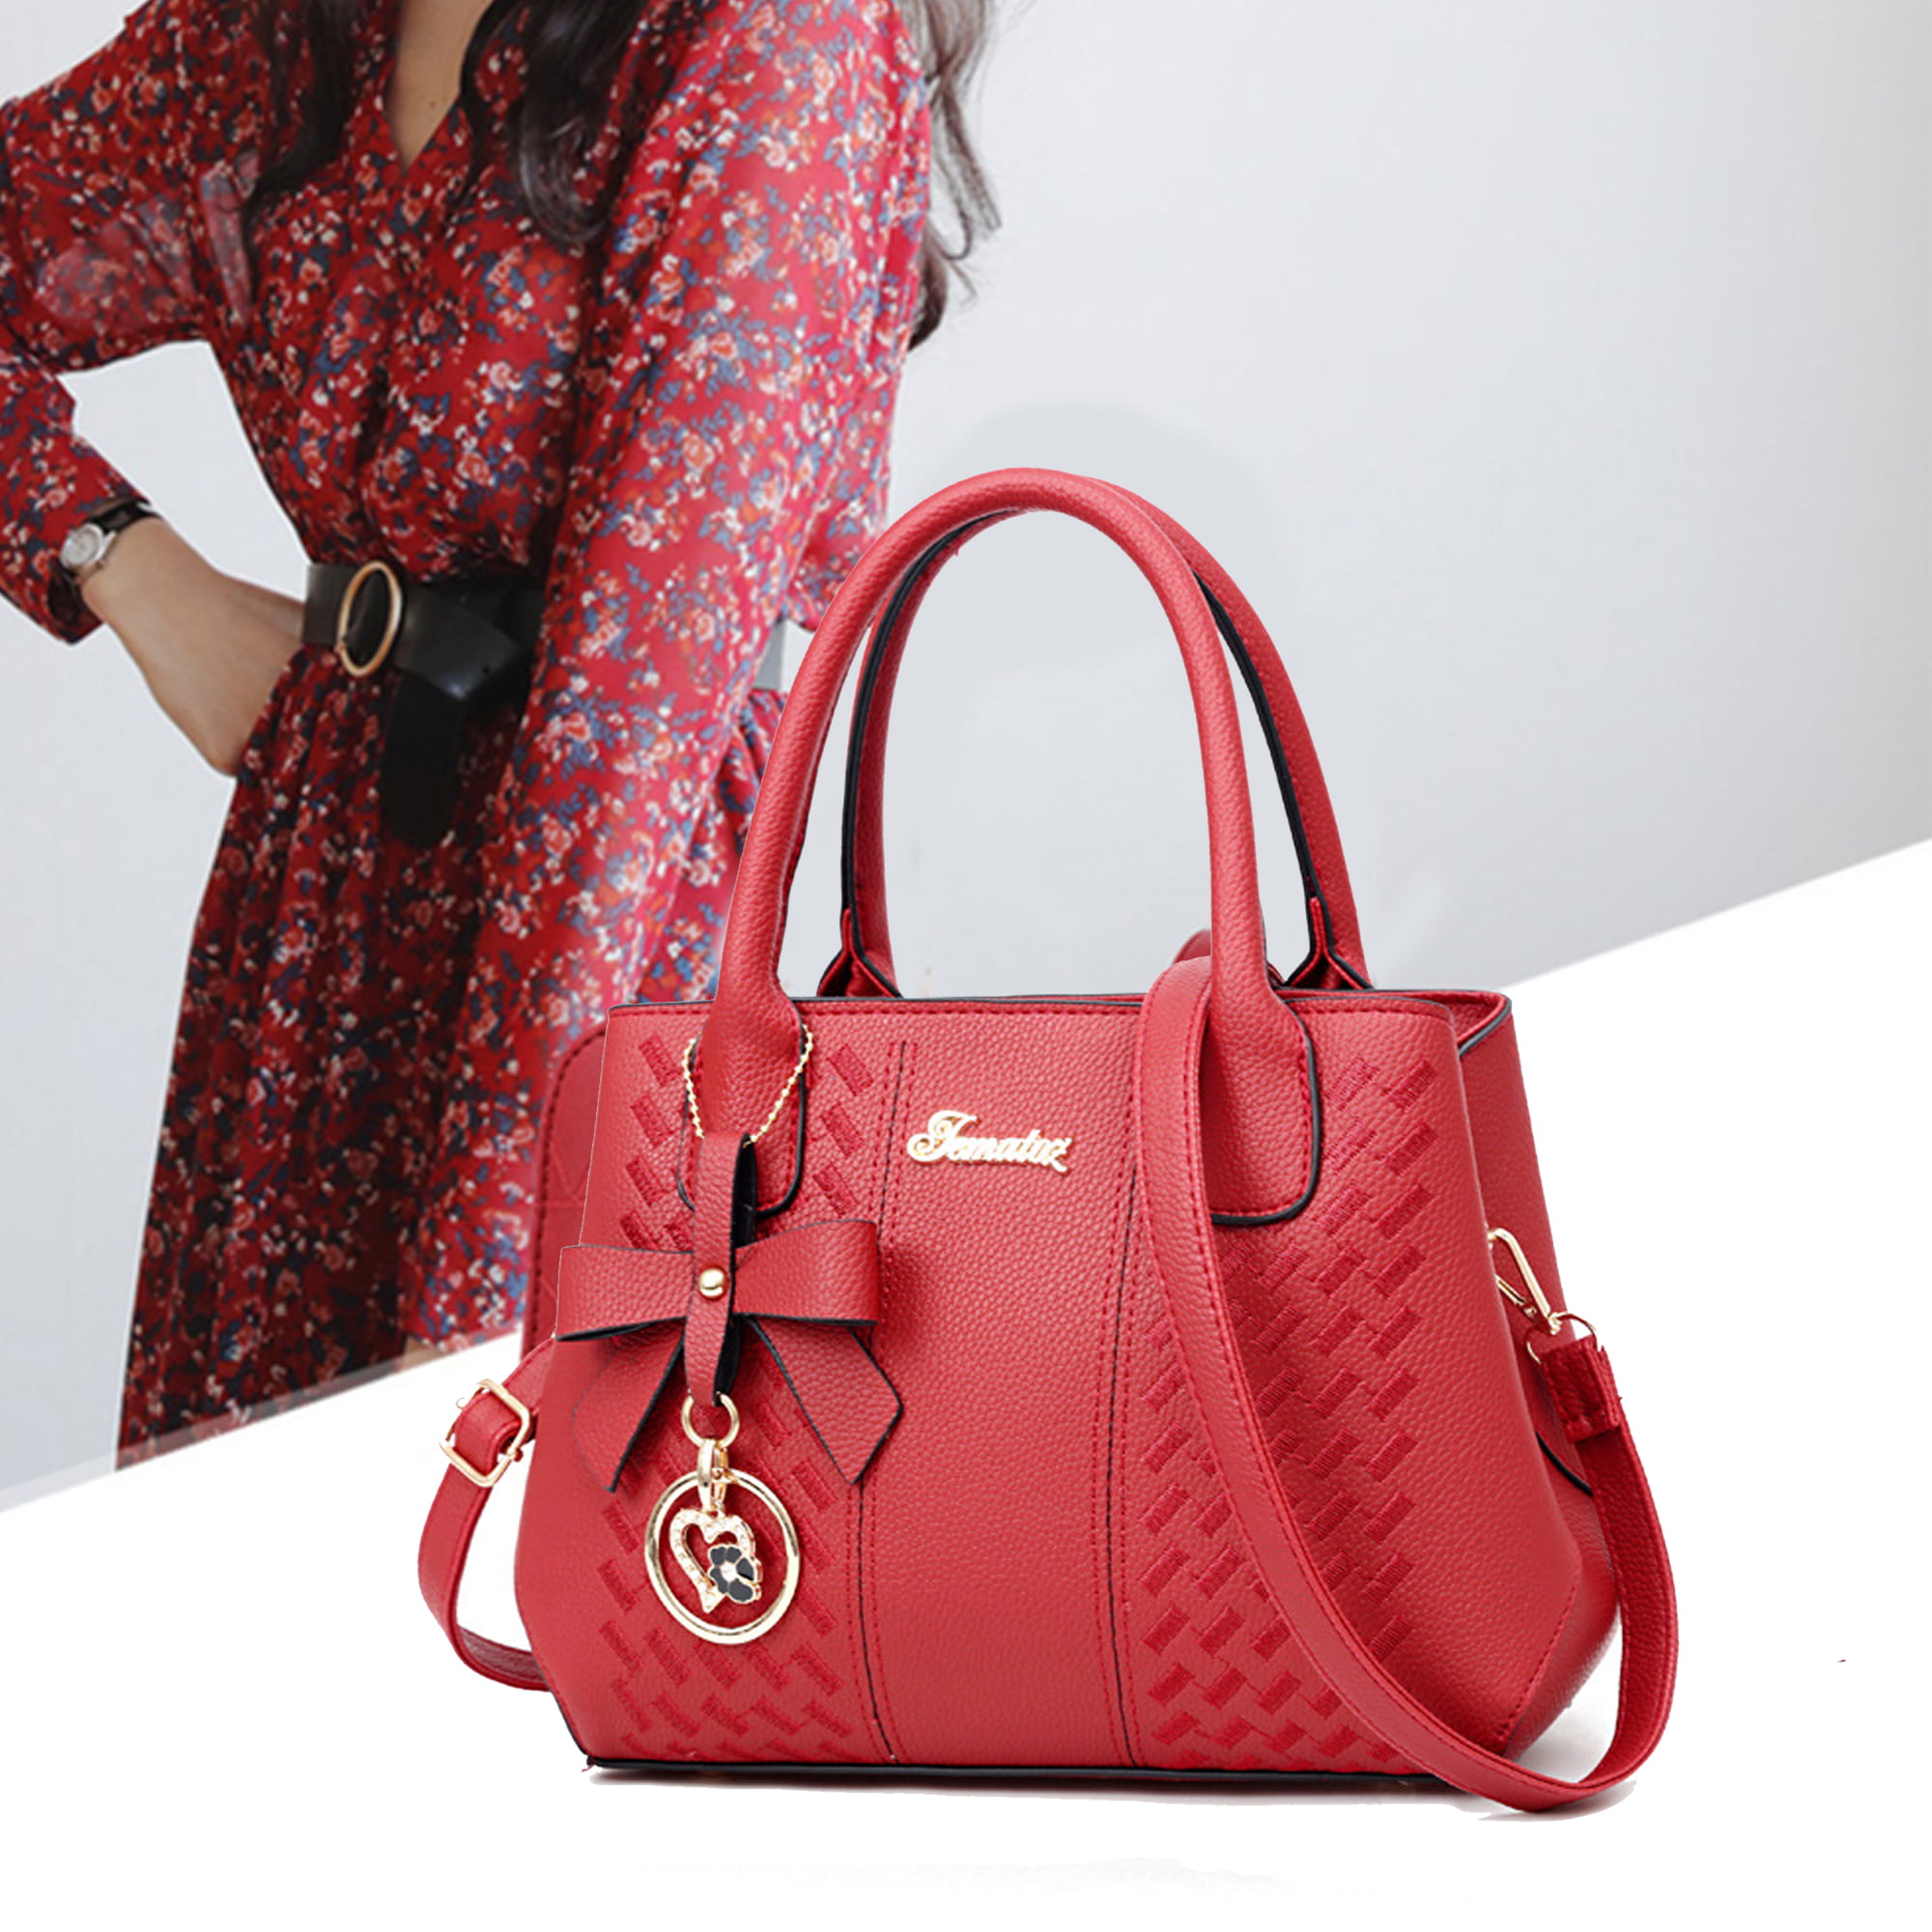 Jeniulet Purses and Handbags for Women Fashion Ladies PU Leather Top Handle  Satchel Shoulder Tote Bags